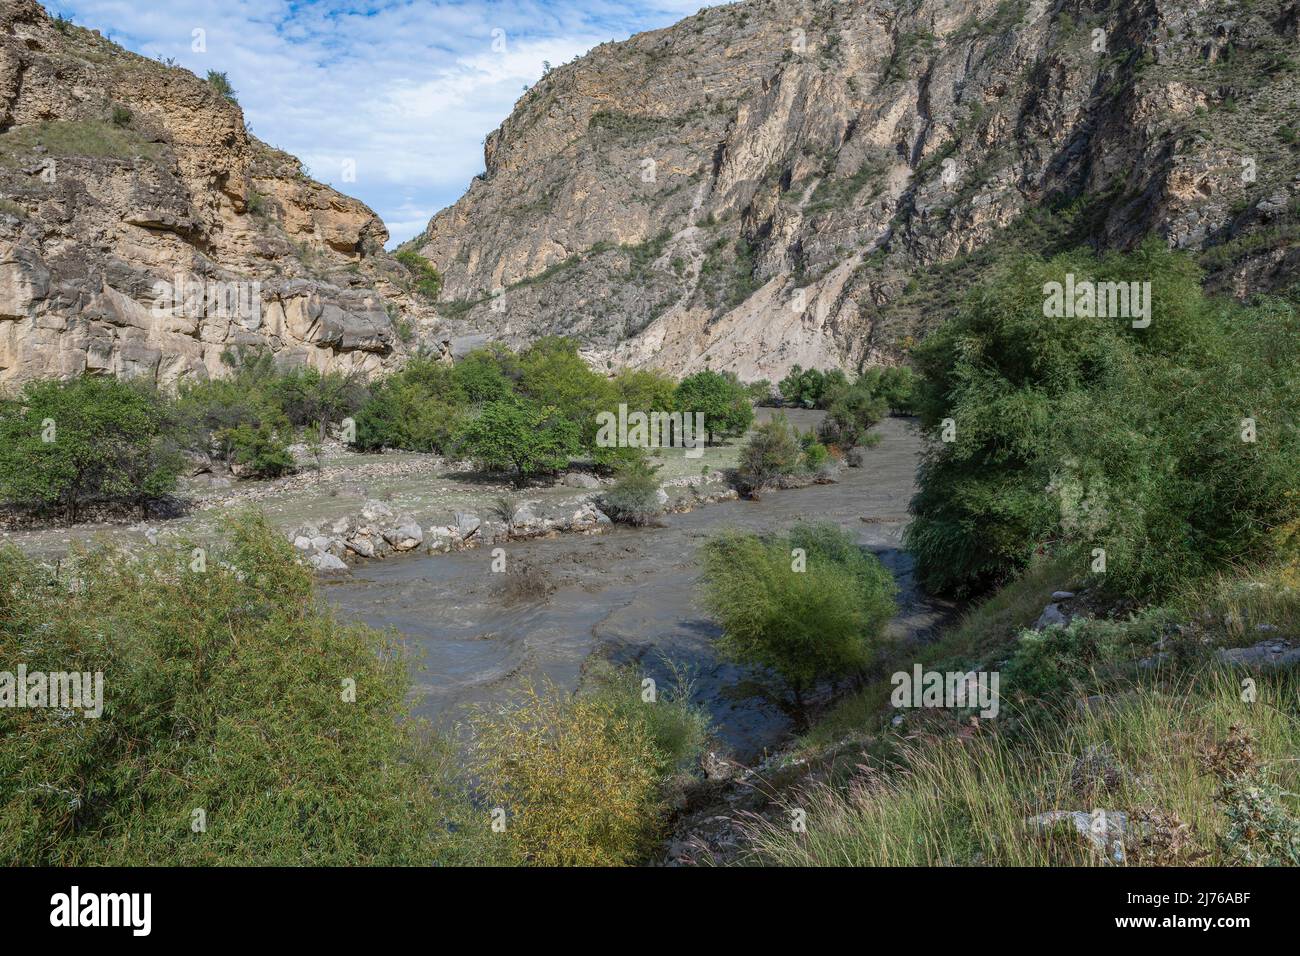 Andiyskoye Koysu river in the mountains of Dagestan. Russian Federation Stock Photo